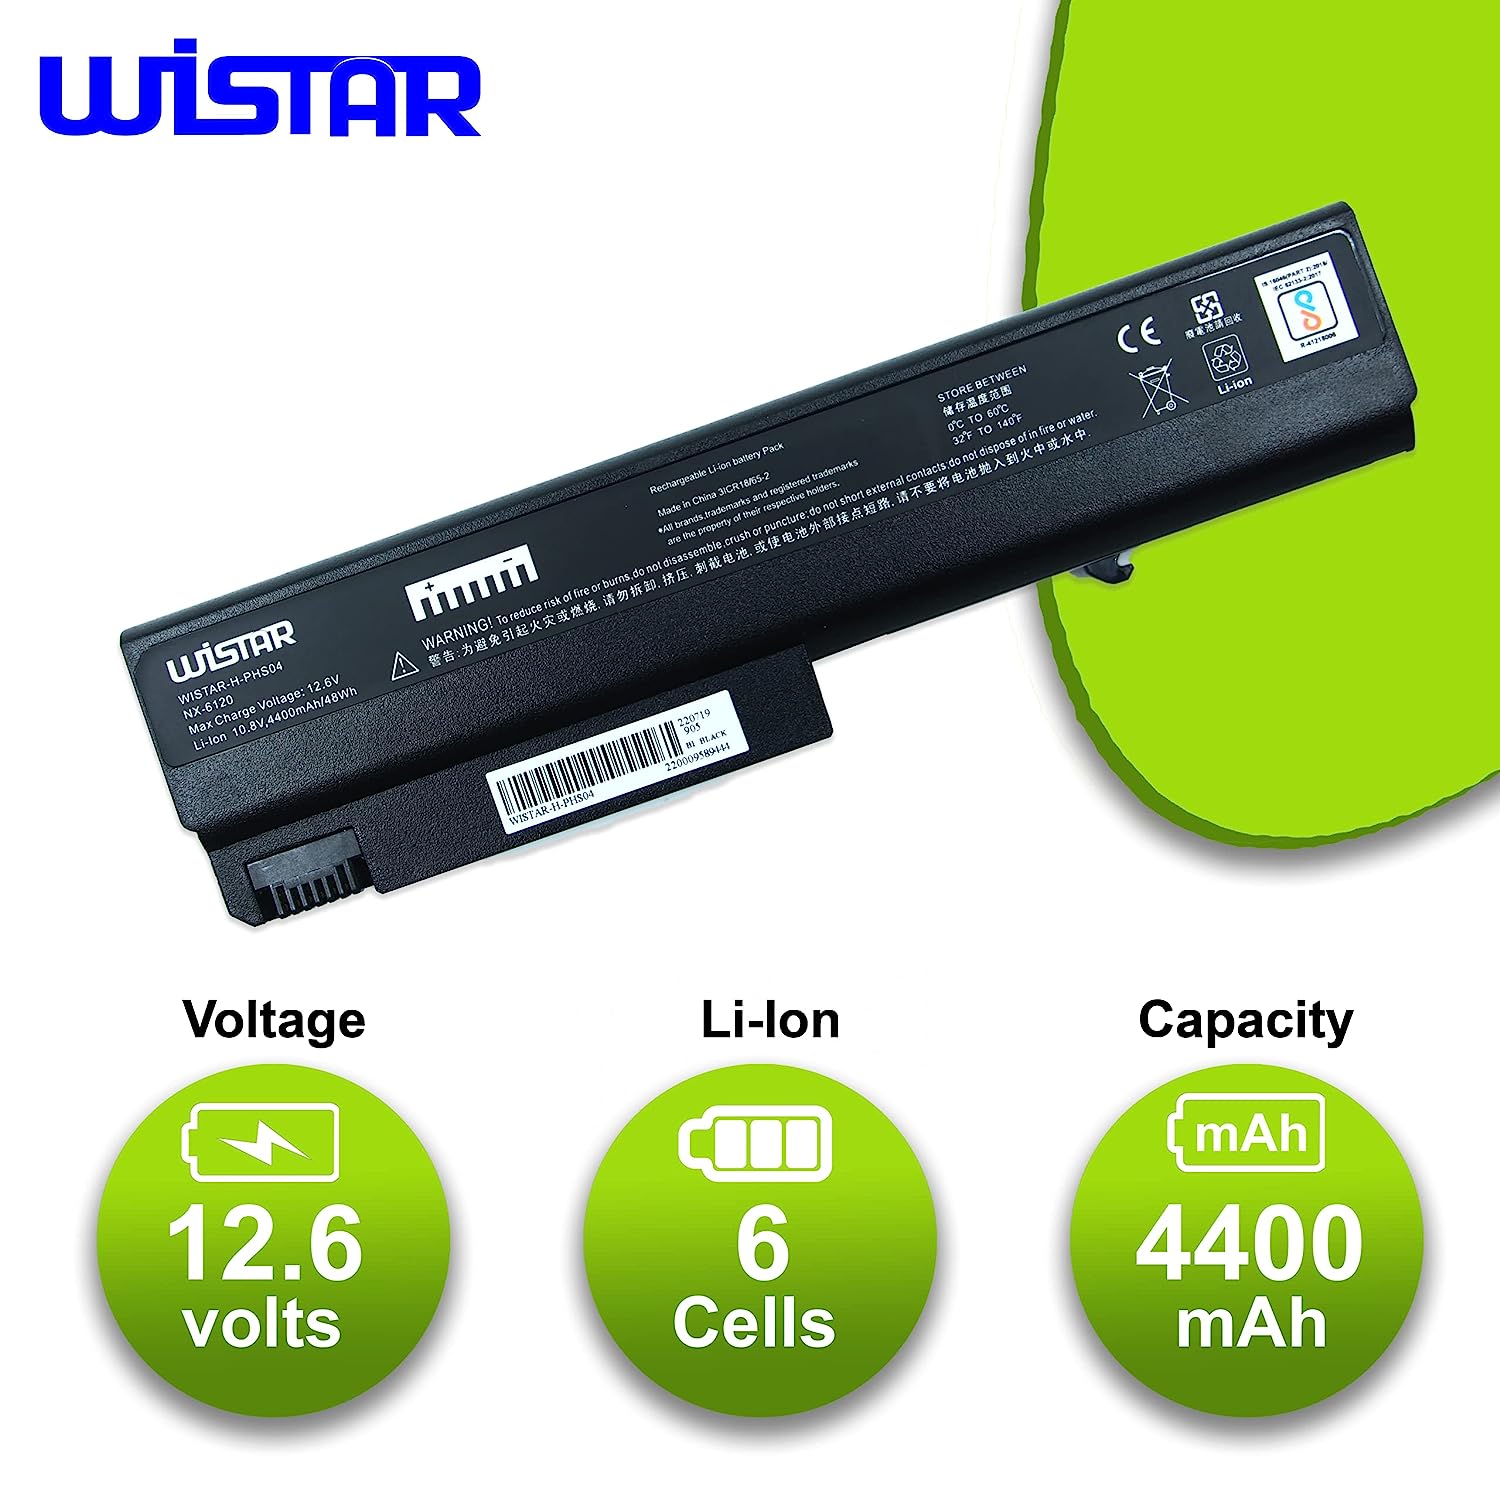 WISTAR Laptop Battery PB994 PB994a for HP Compaq NX6120 NC6120 NX6110 NC6400 NC6120 NX6320 HSTNN-DB28 HSTNN-FB05 Black